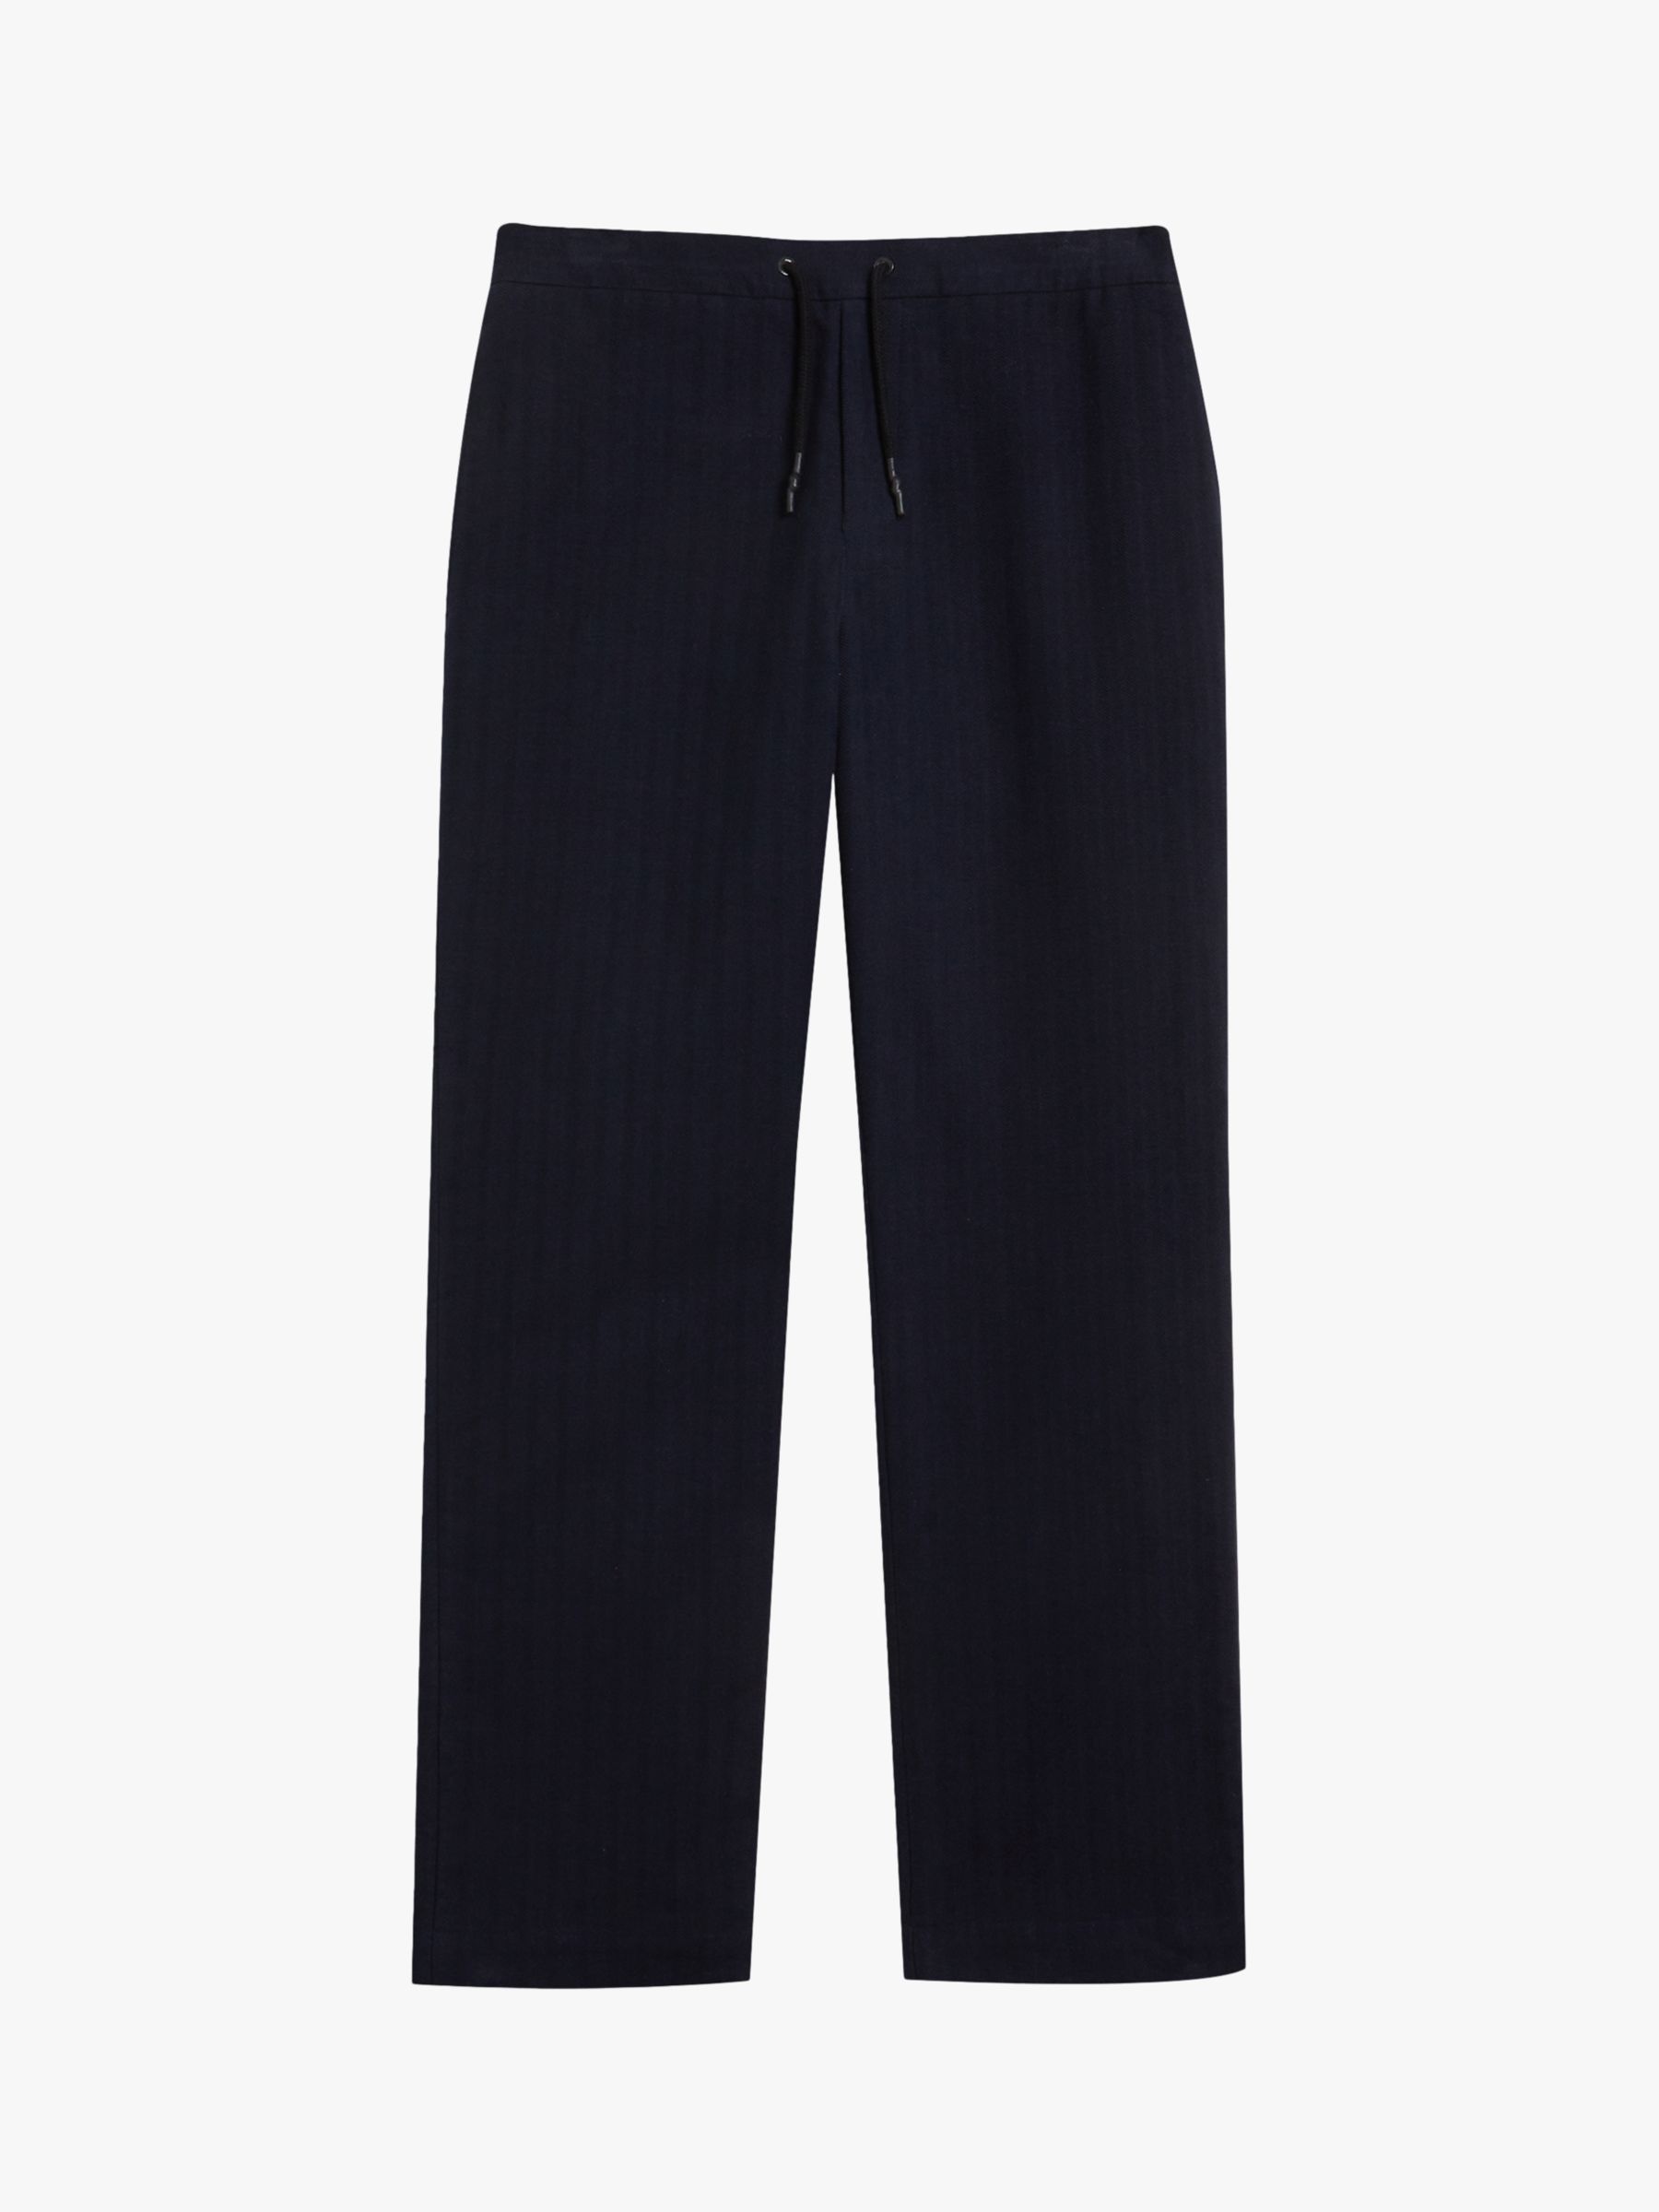 Ted Baker Roydon Cotton Trousers, Dark Navy at John Lewis & Partners